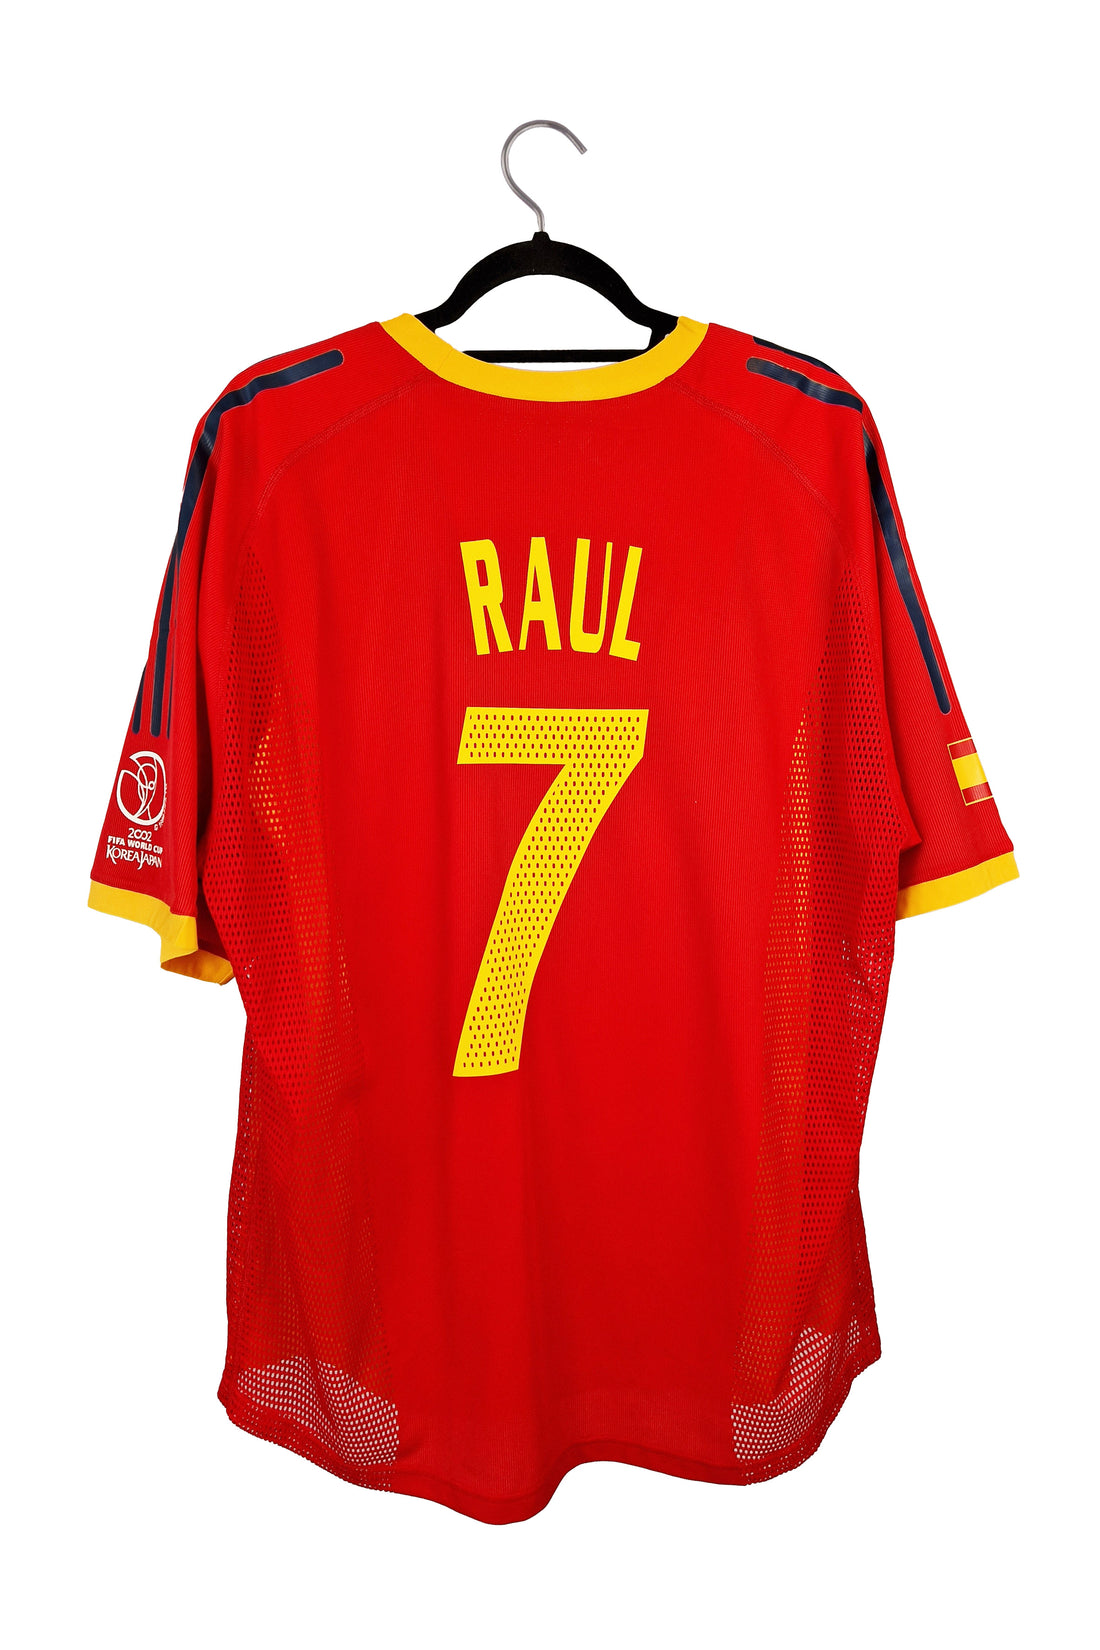 Spain 2002 - 2004 Player Issue Home Football Shirt #7 Raul